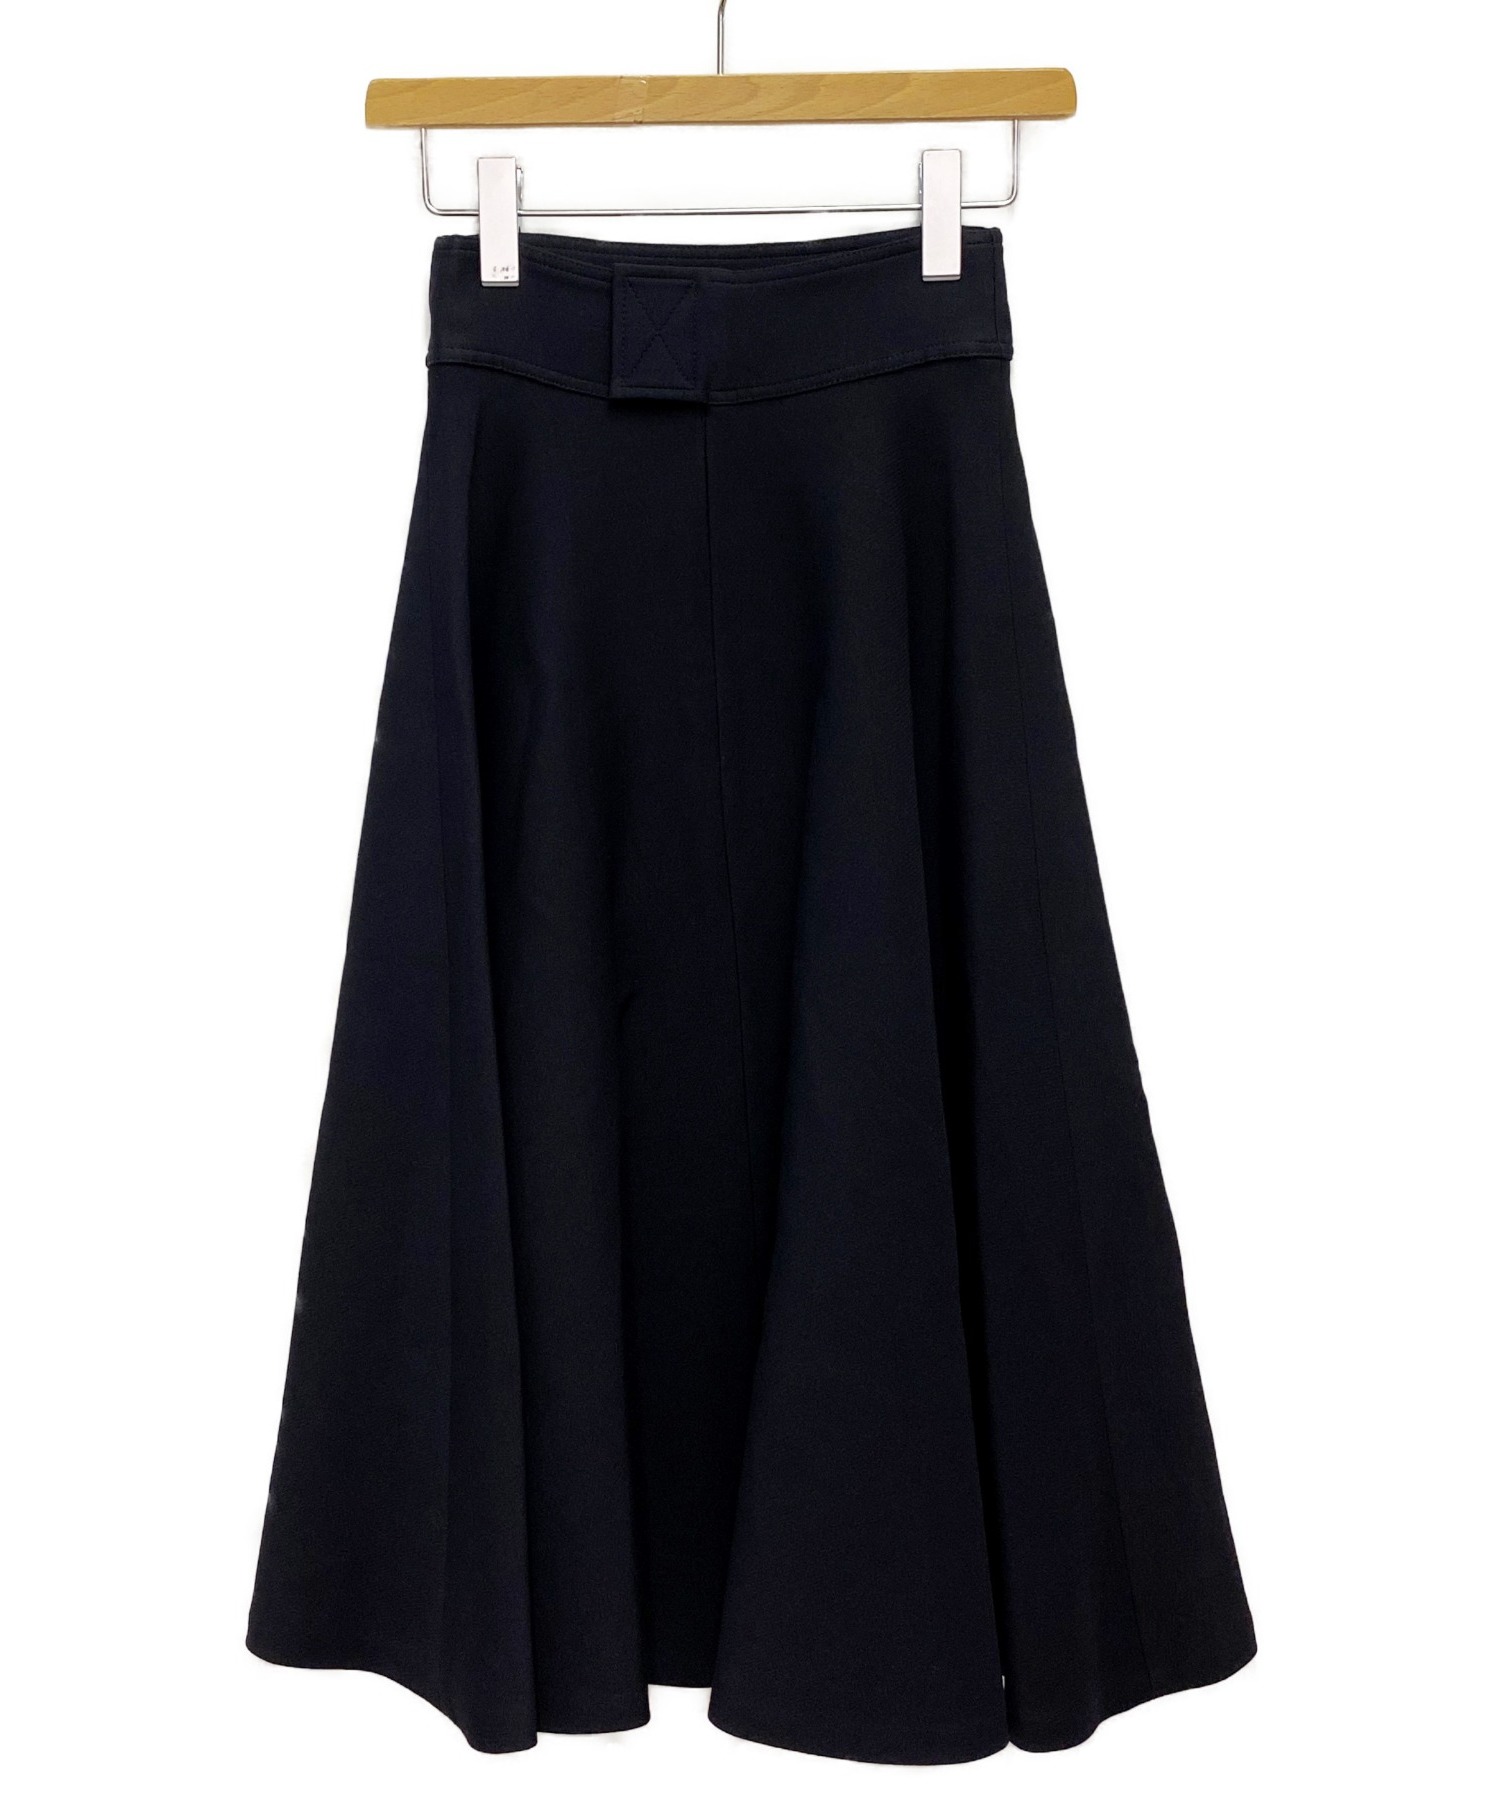 Christian Dior (クリスチャンディオール) フレアスカート ブラック サイズ:34